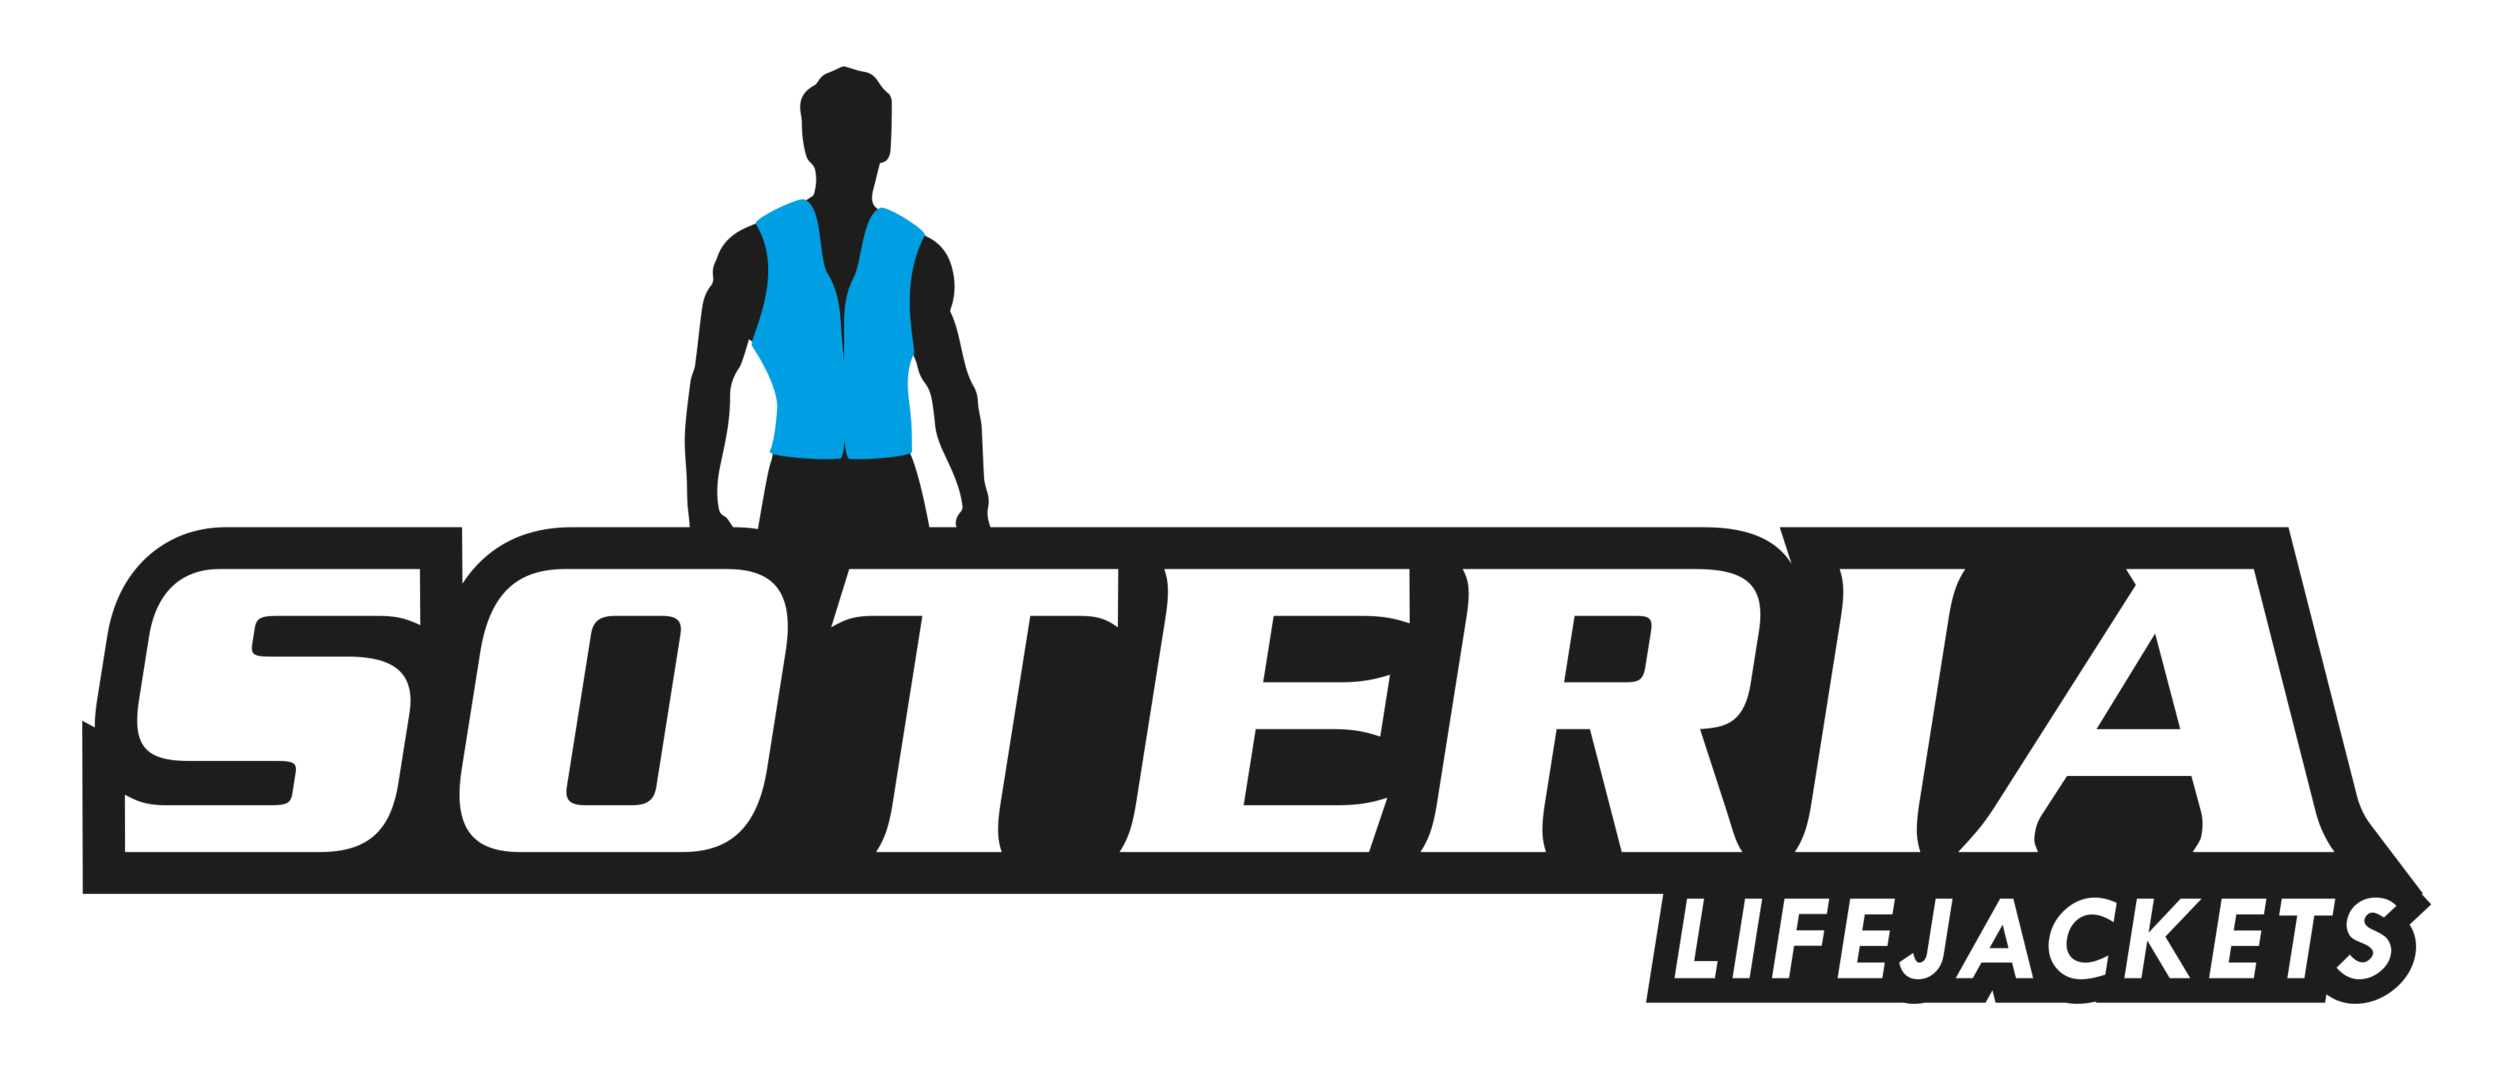 Soteria Lifejackets Branding